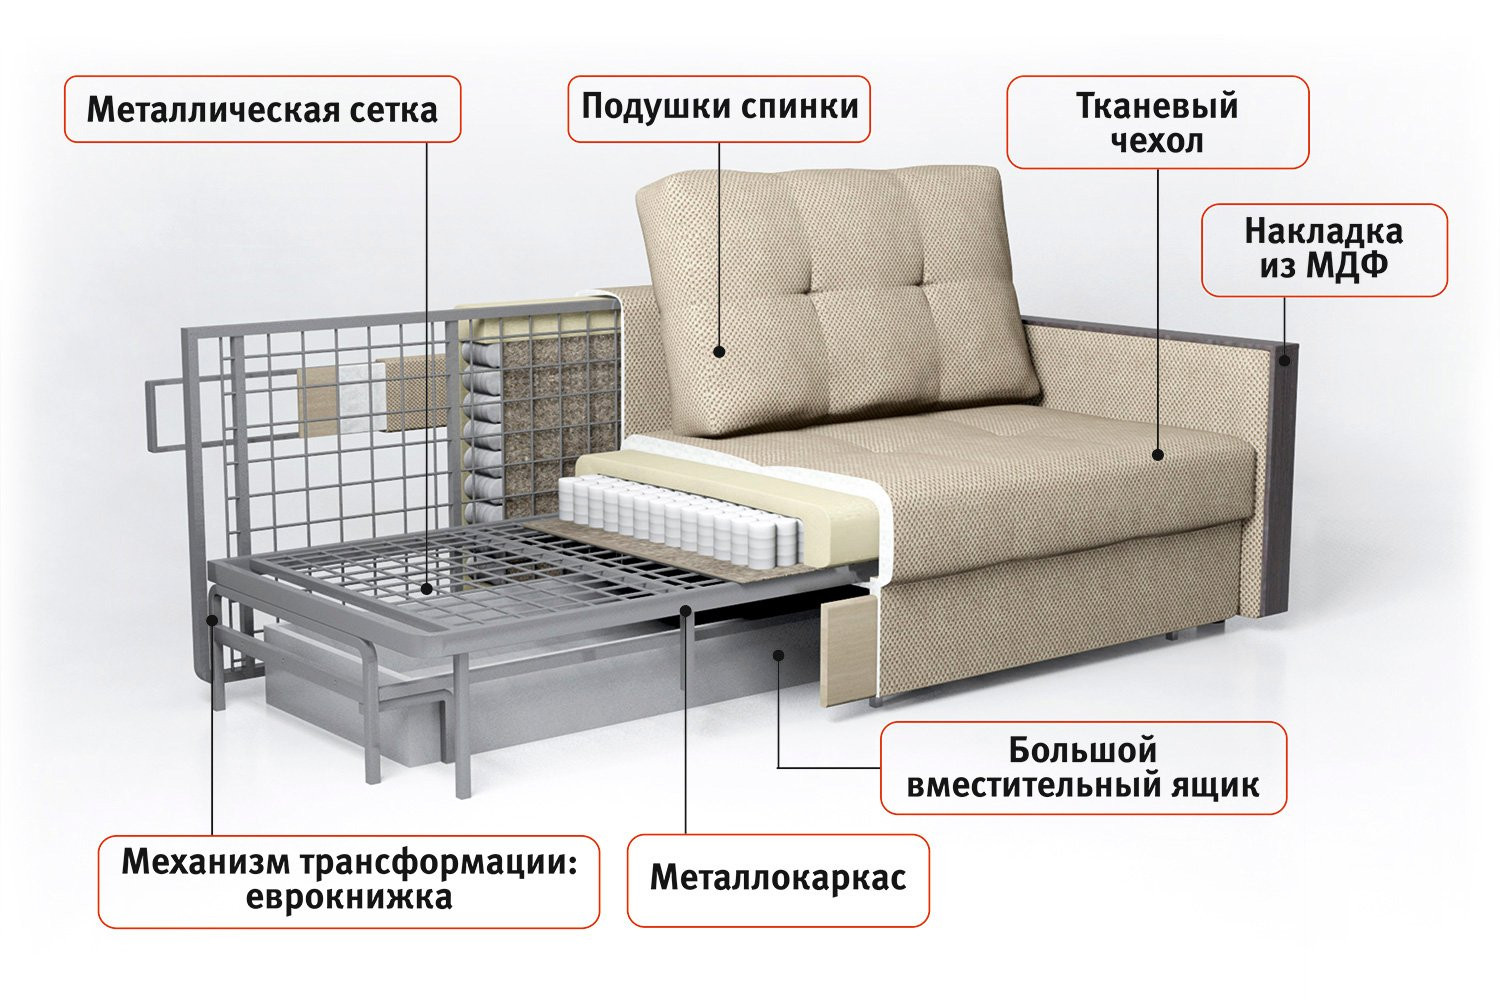 состав пружинного блока дивана